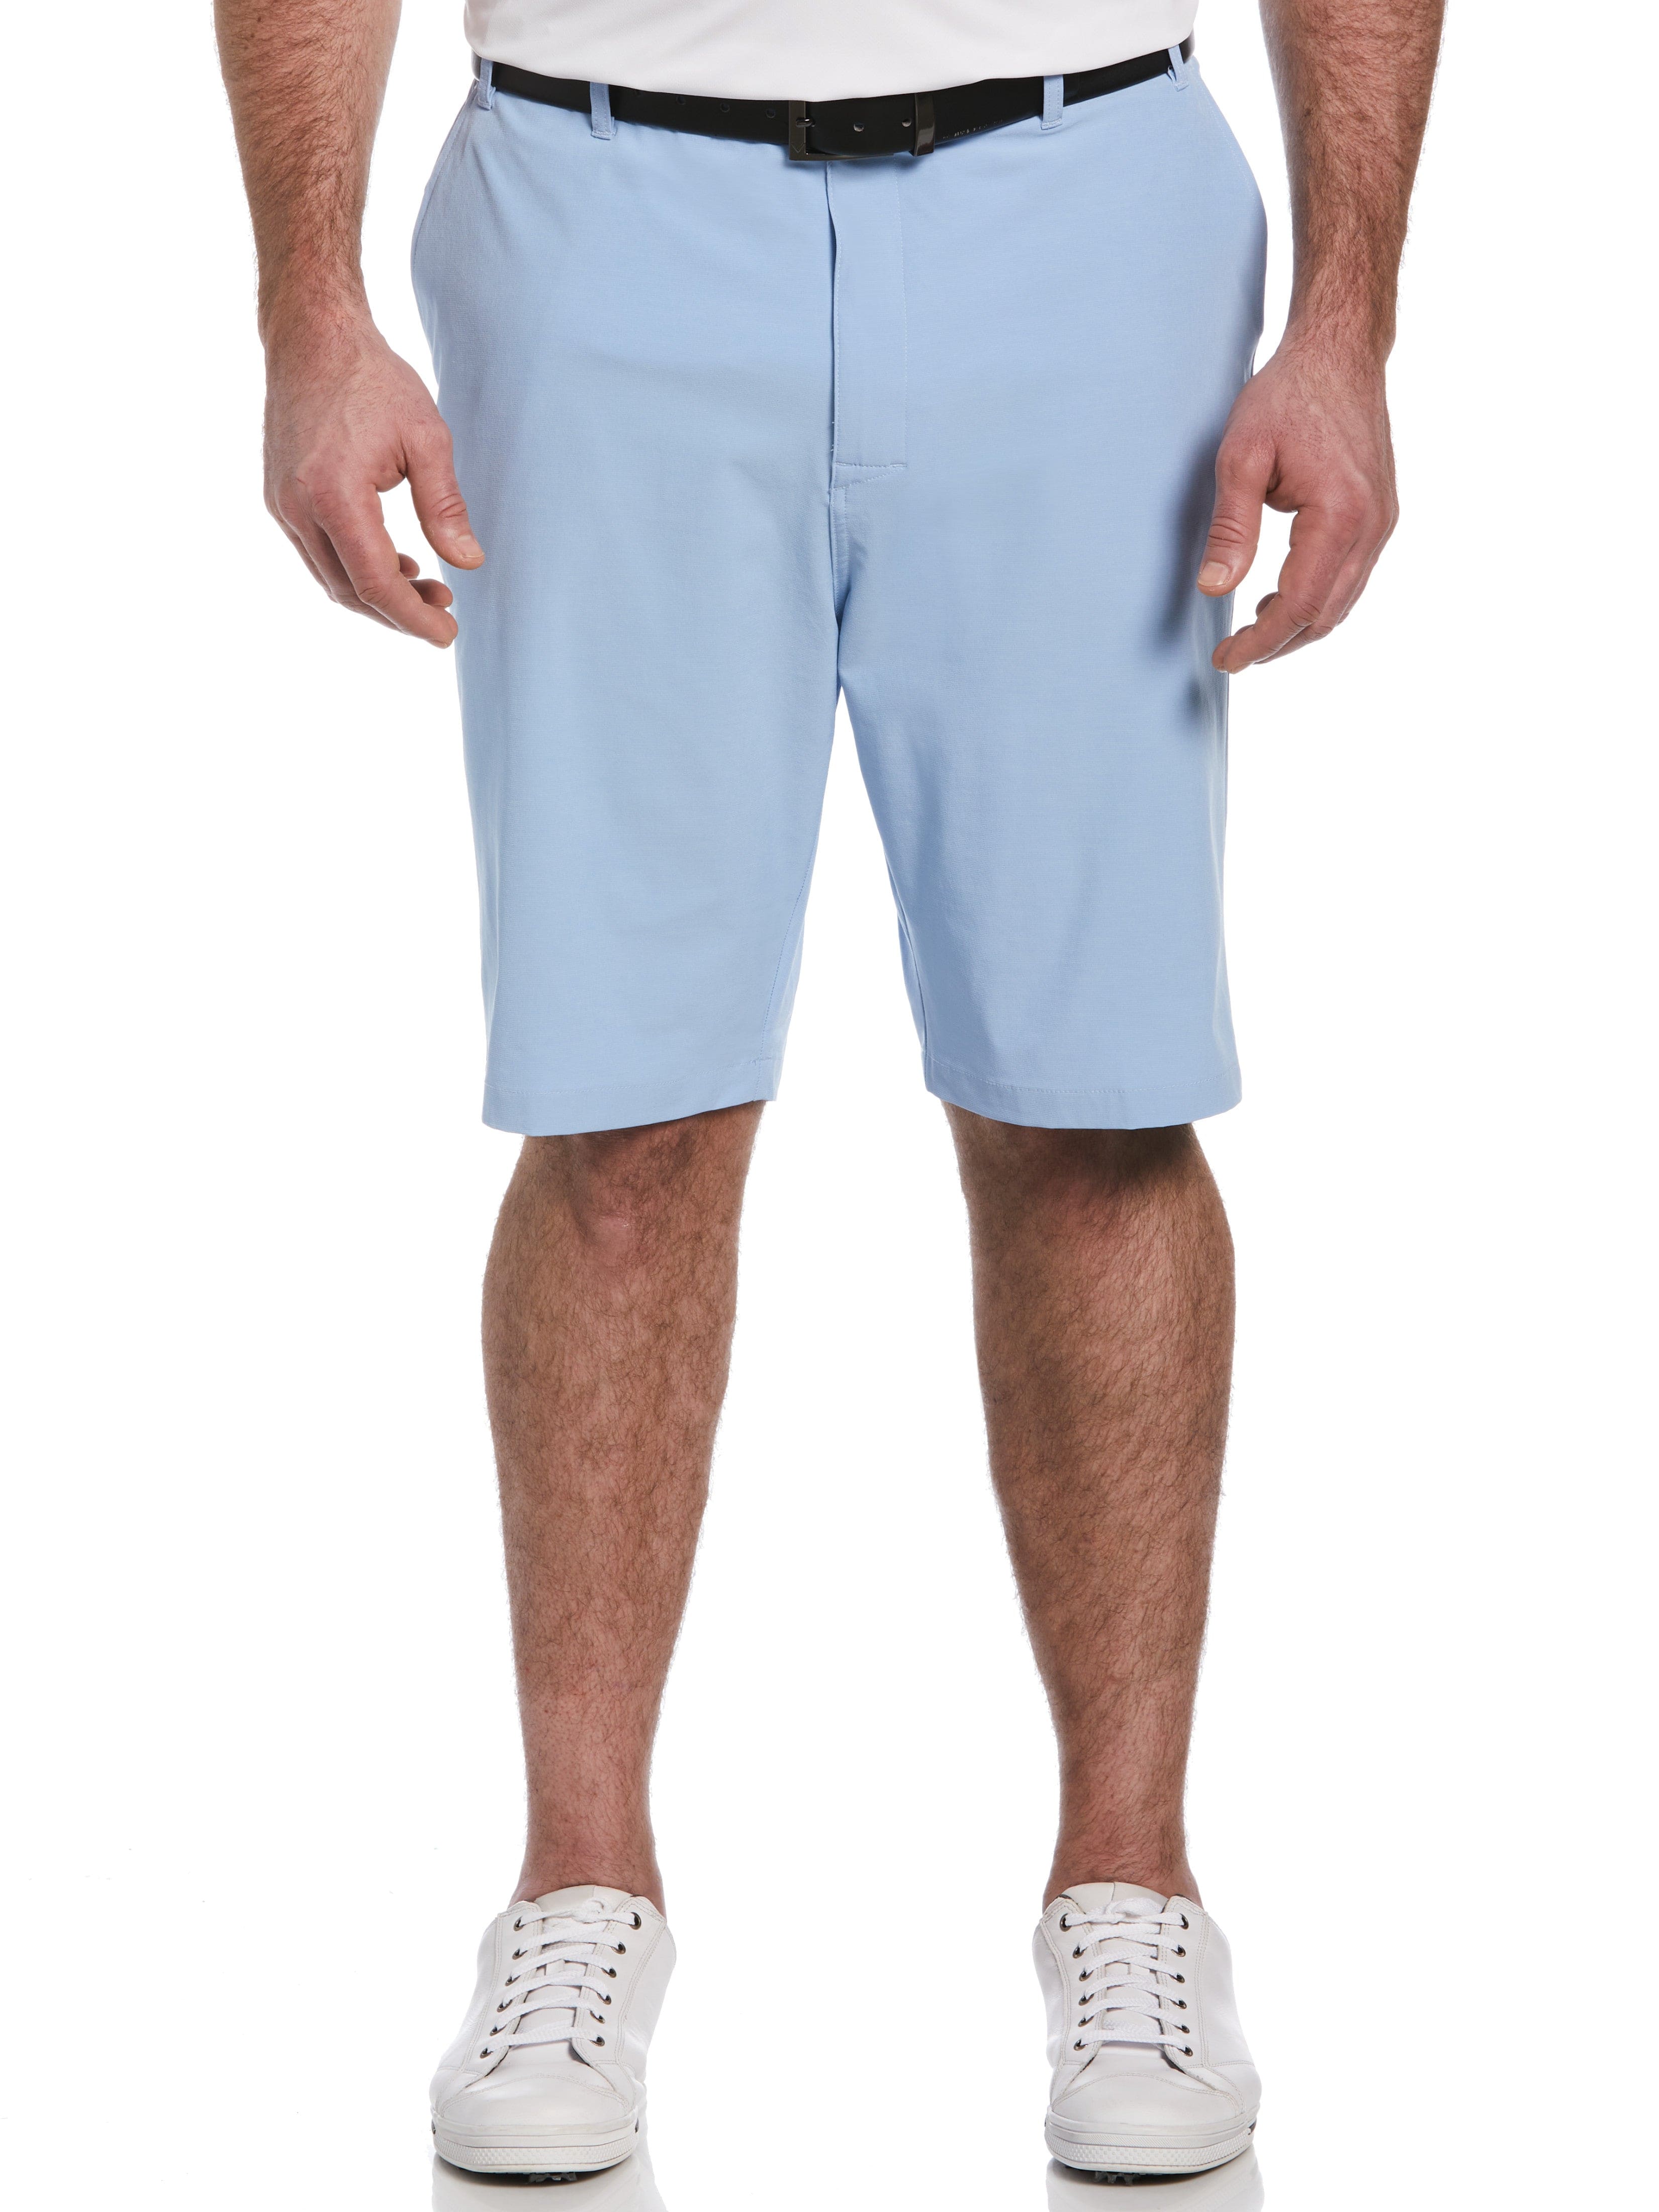 Men's Golf Shorts Stretch Chino Lightweight Quick Dry Flat Front Work Half  Pants